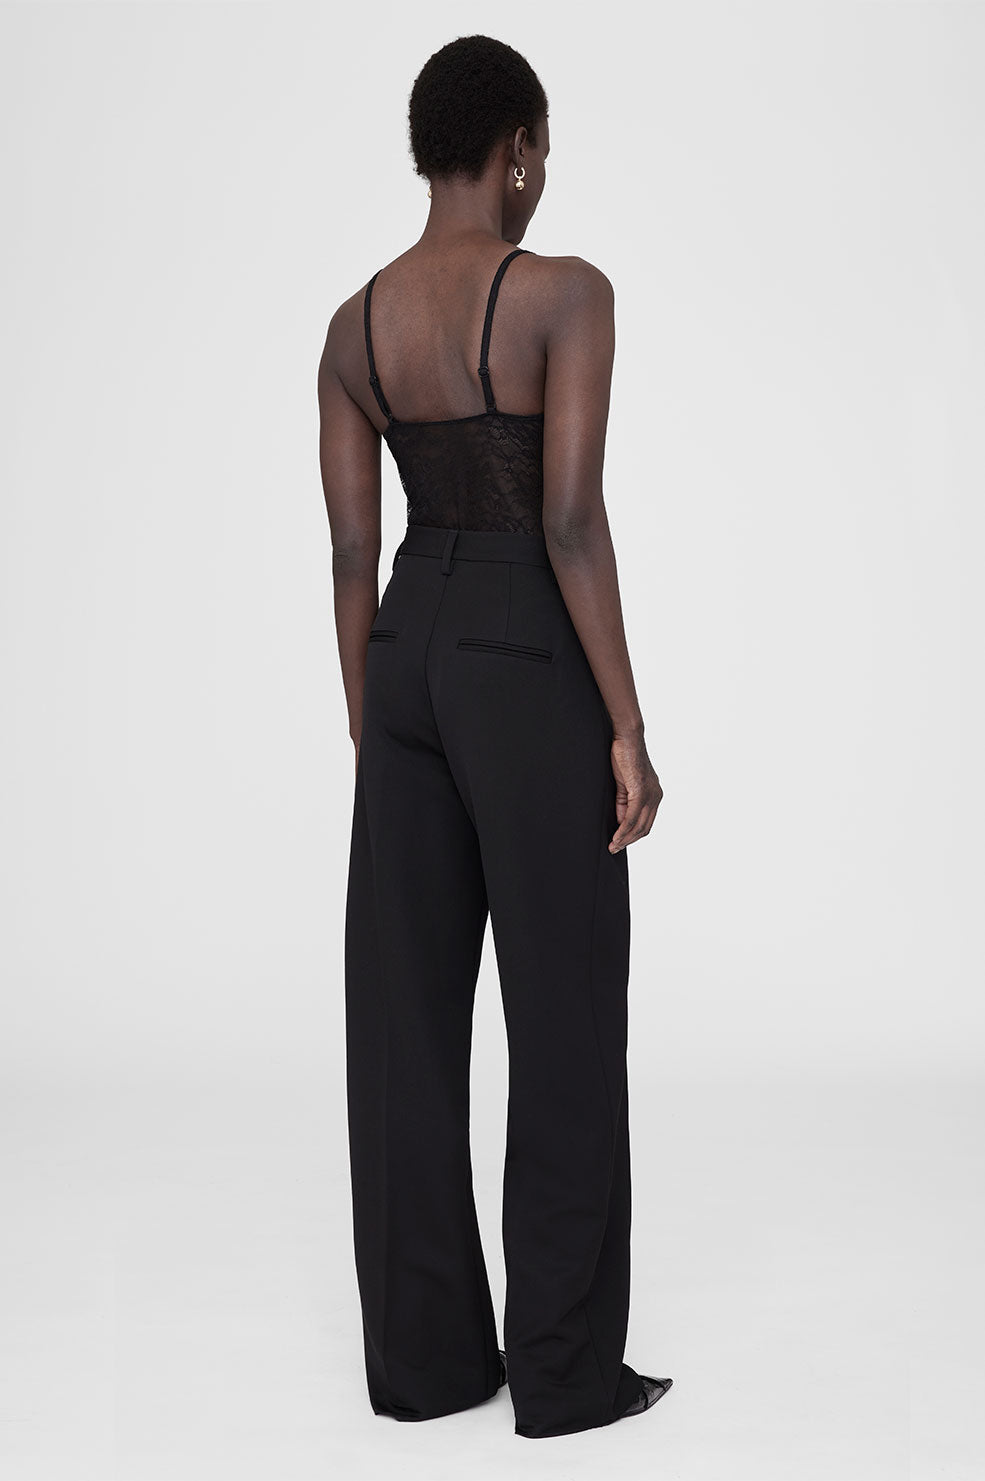 Zara Black Lace Pull On Pants Size S